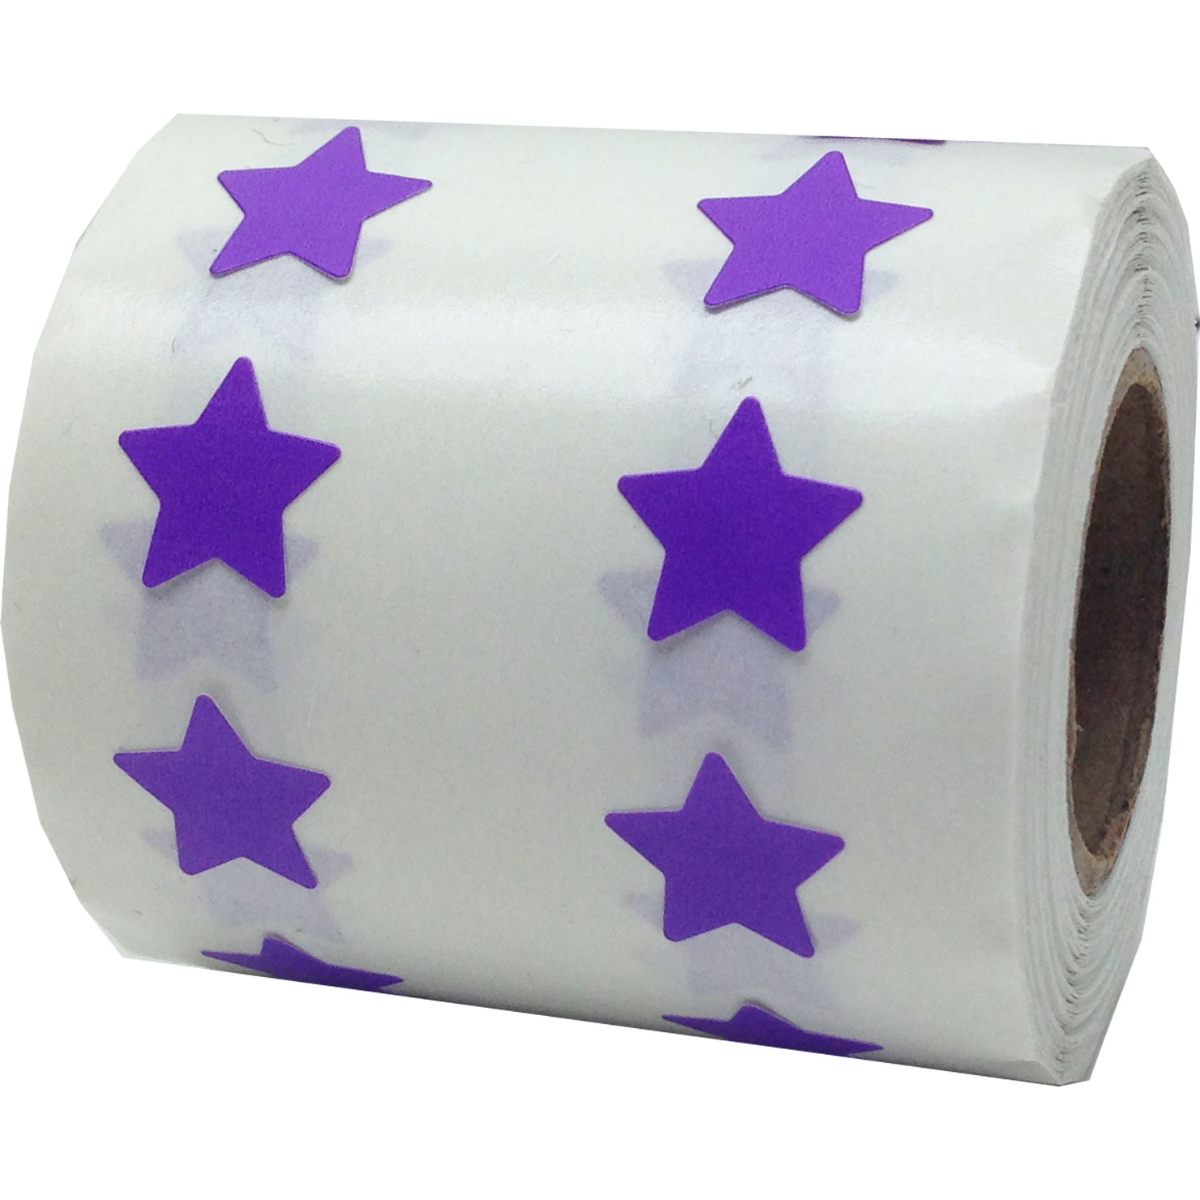 Small Lilac Star Stickers, 1/2 Star Shape